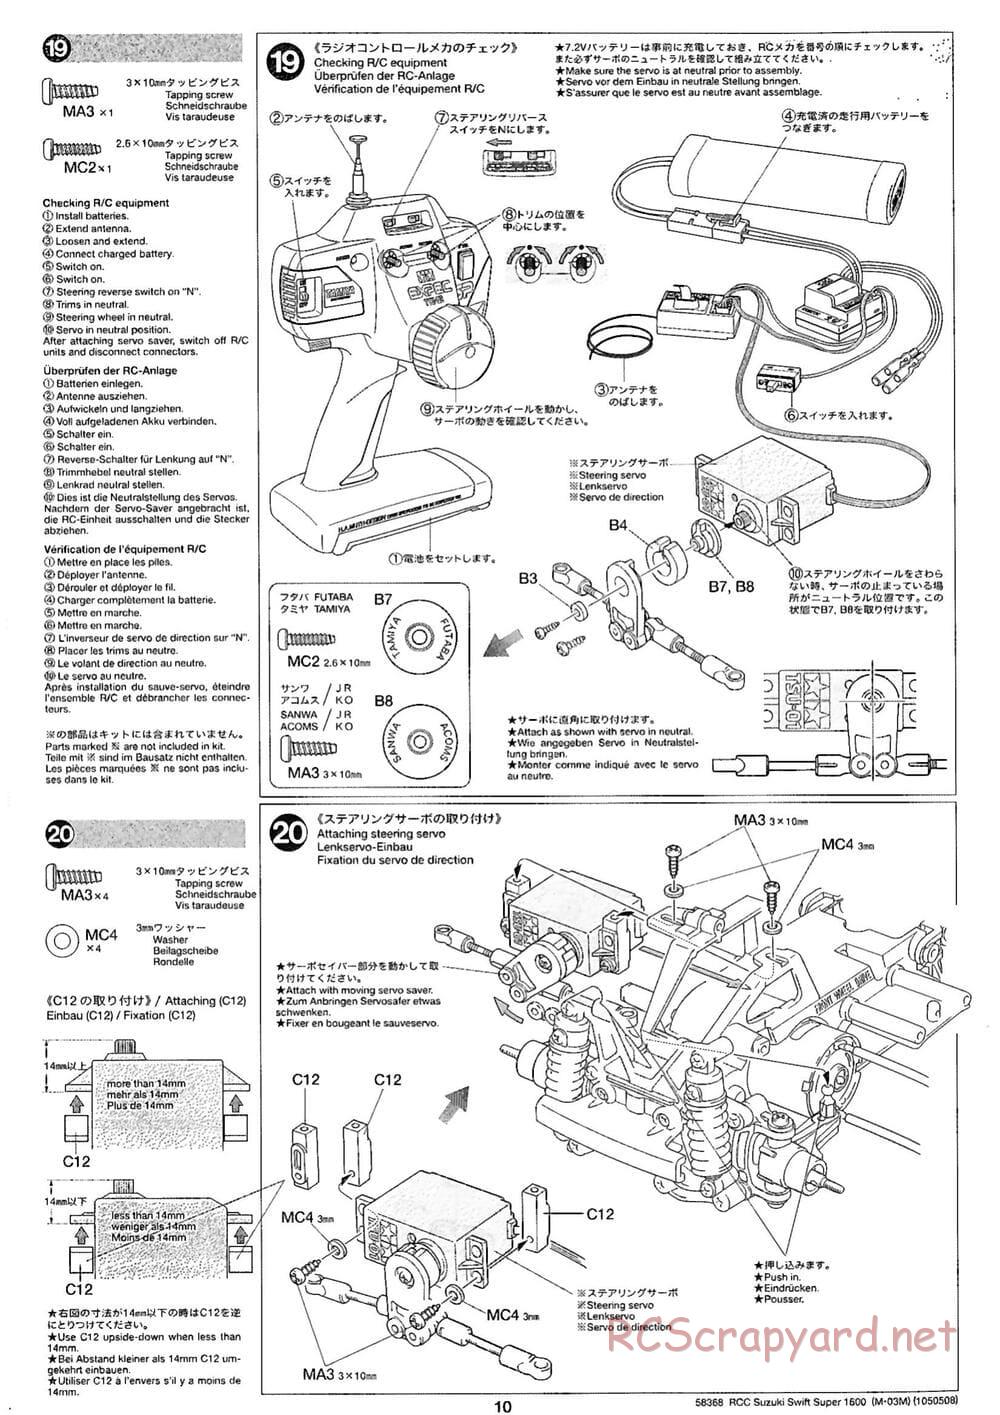 Tamiya - Suzuki Swift Super 1600 - M03M Chassis - Manual - Page 10